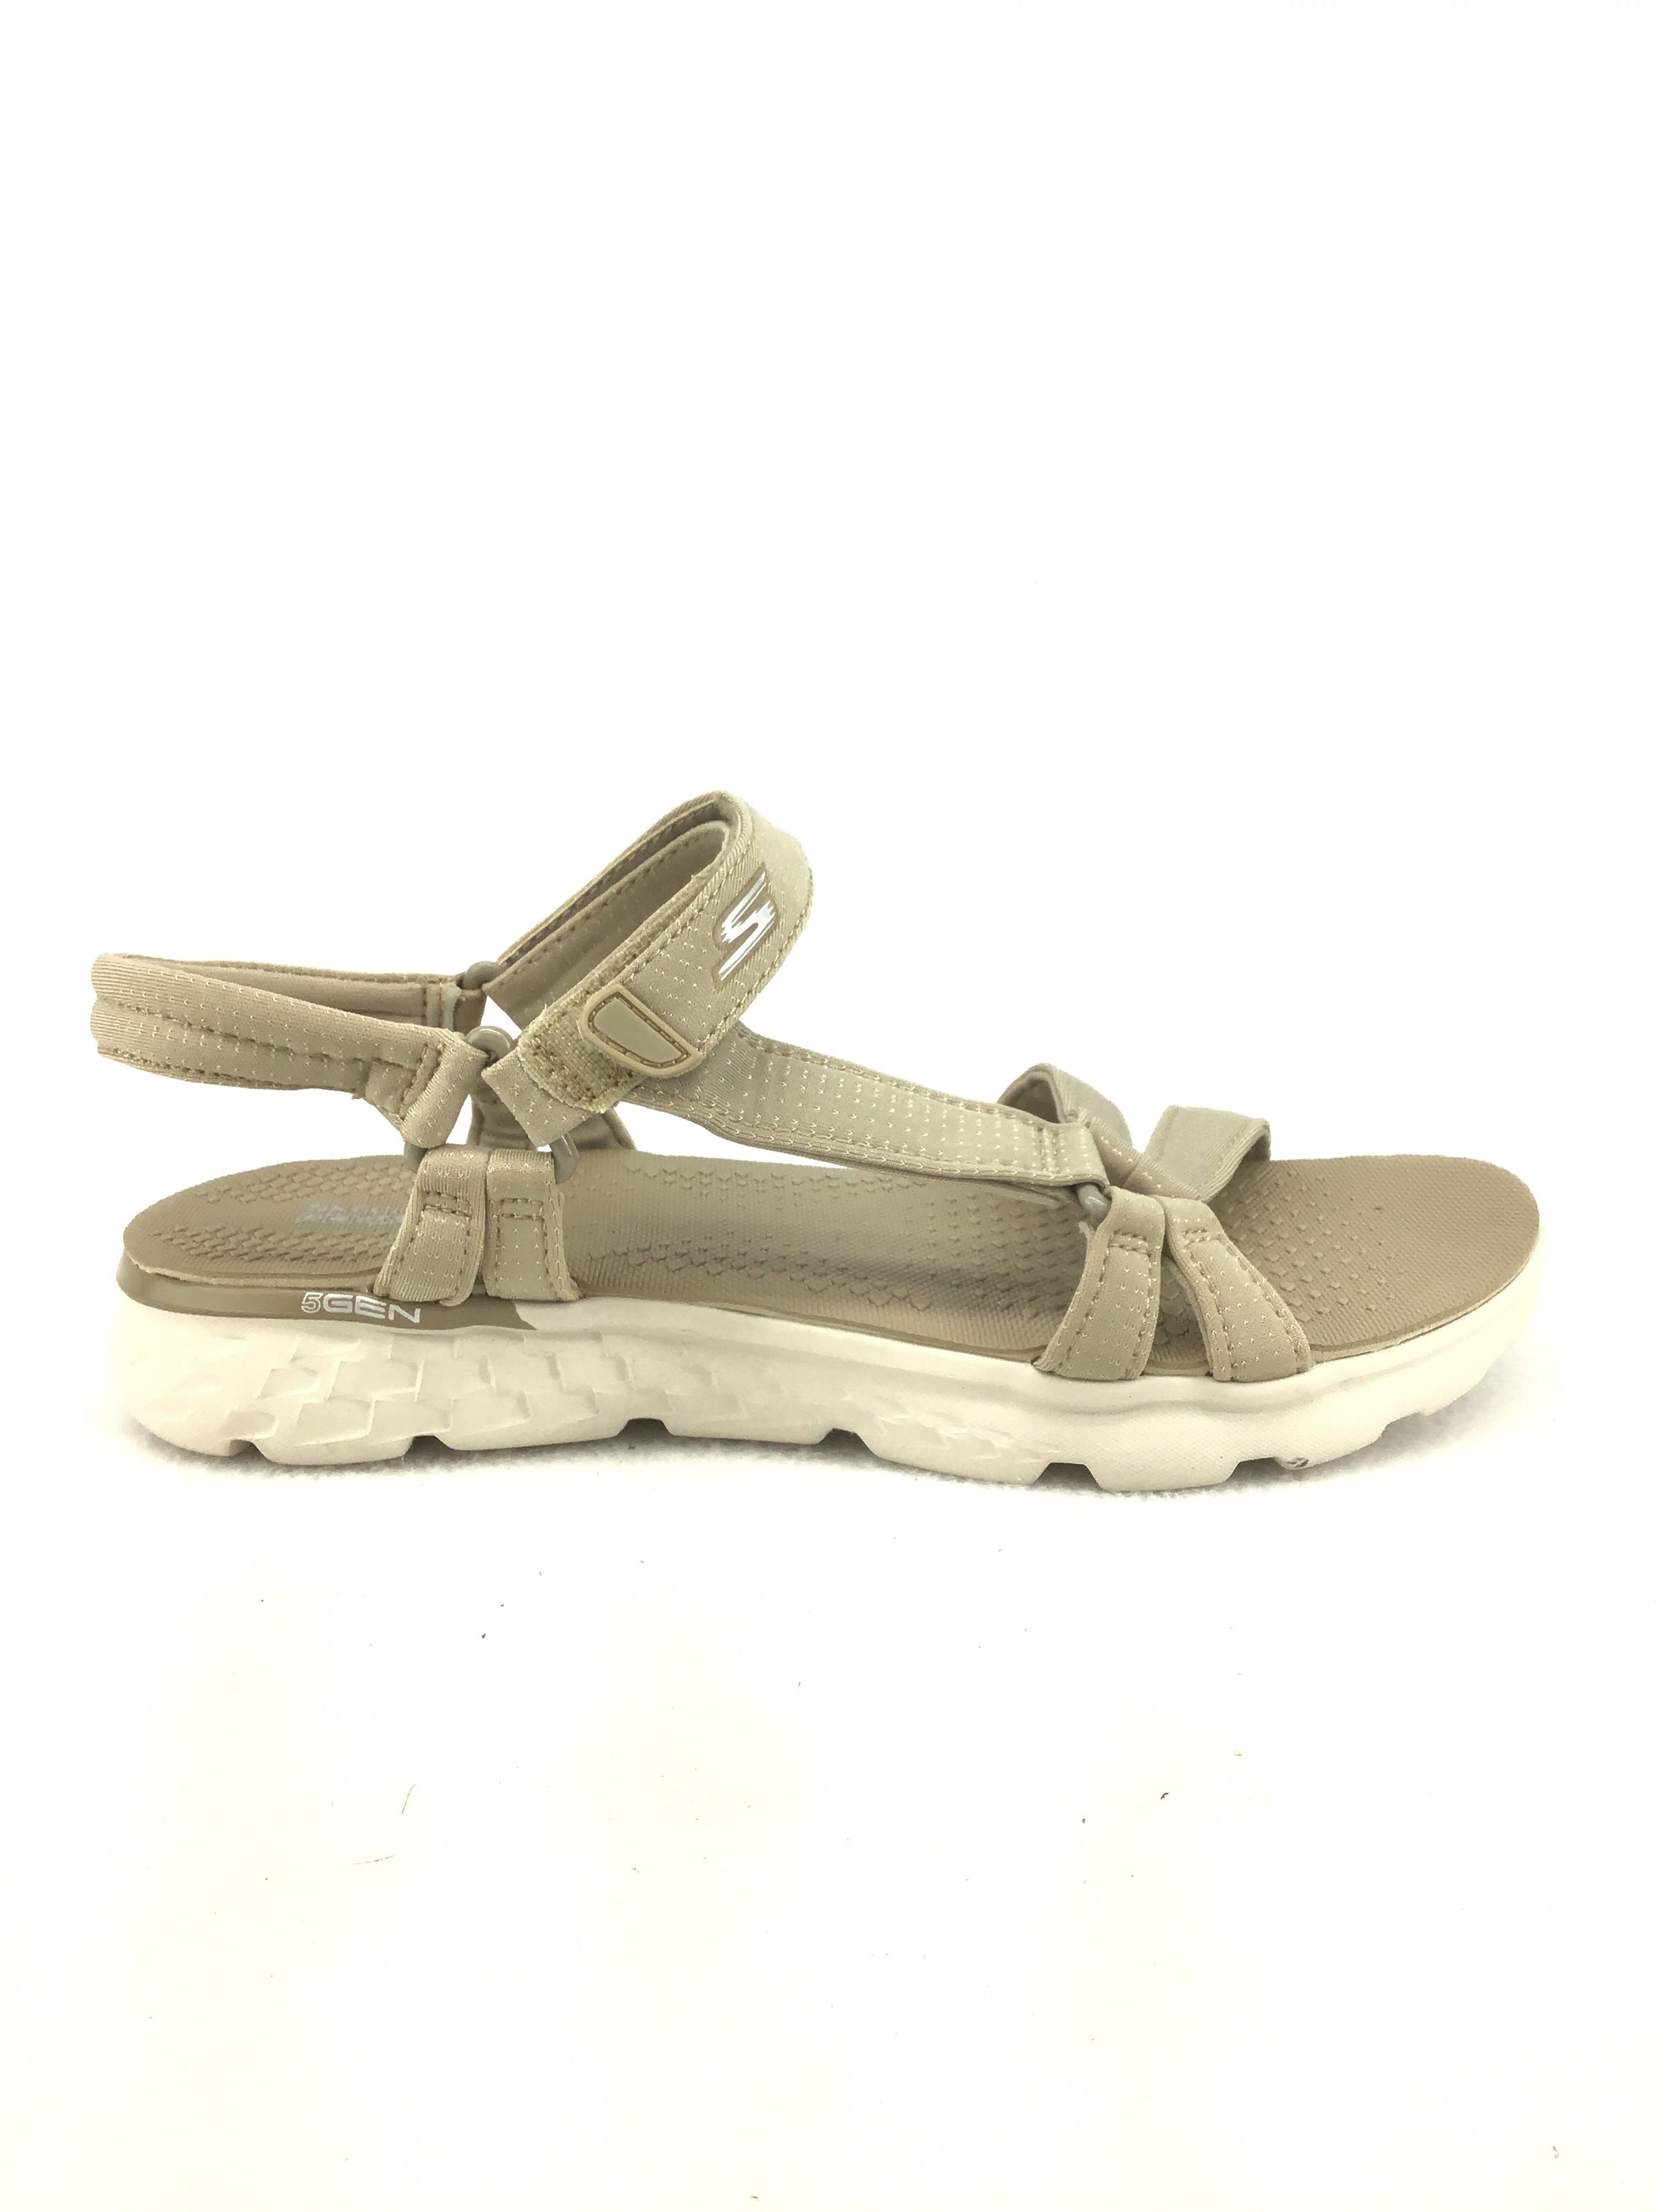 Skechers Sport Sandals Size 8